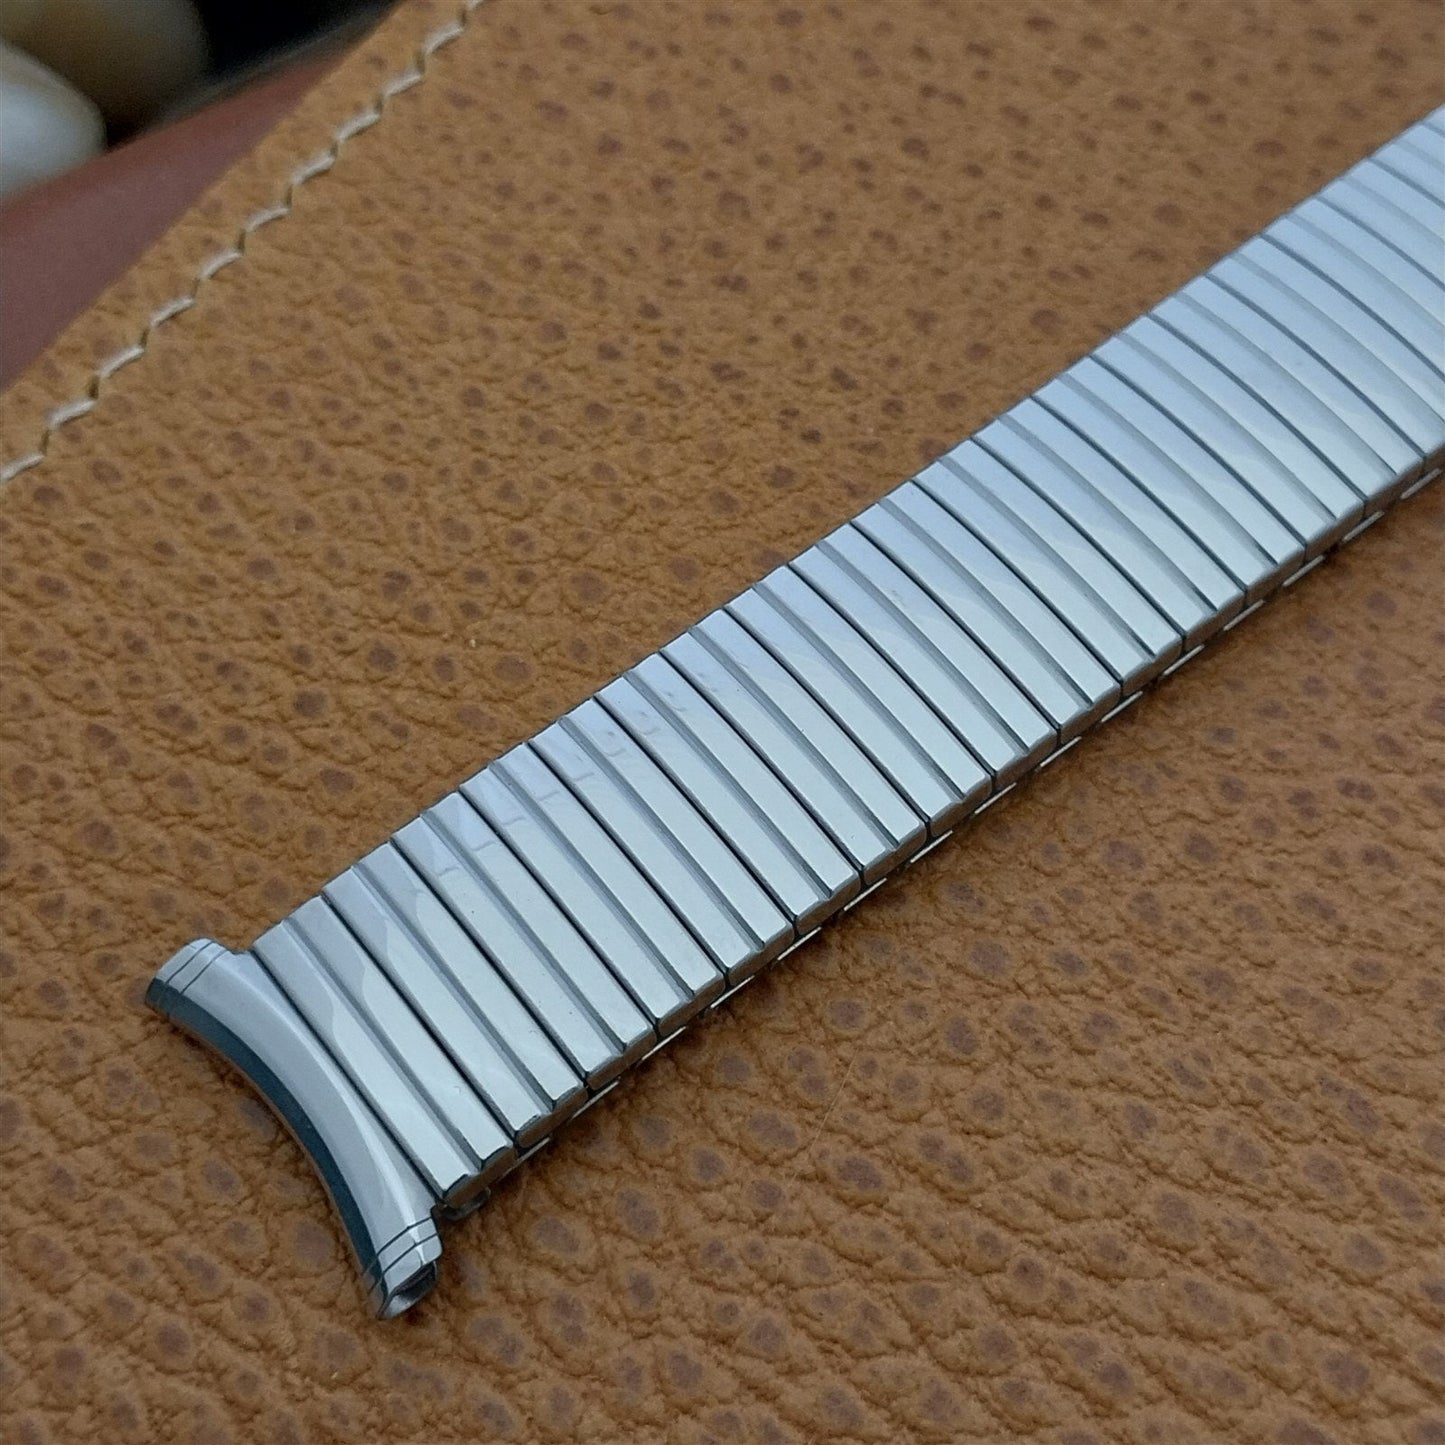 19mm 18mm 16mm Stainless Steel Speidel 1968 Twistoflex Unused Vintage Watch Band